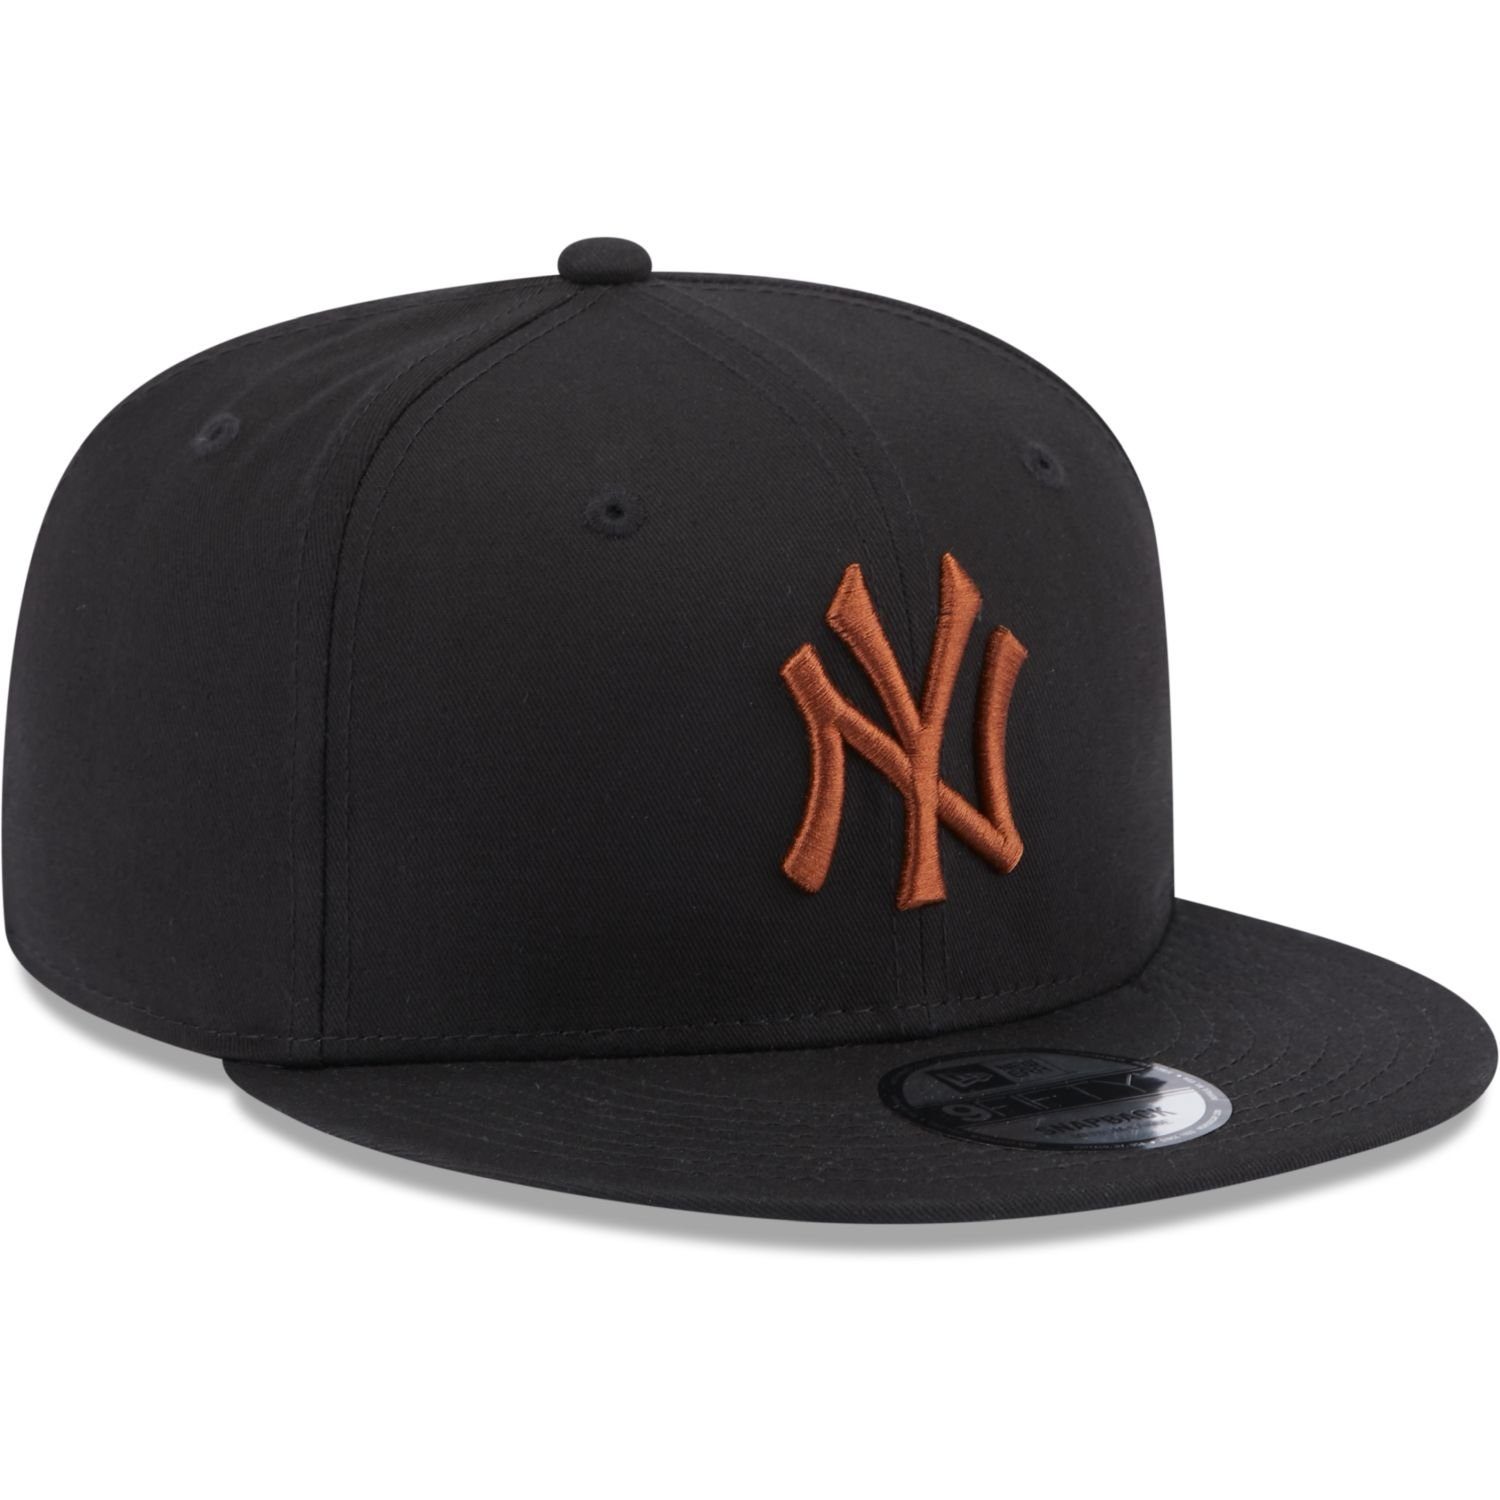 New Cap New Yankees Snapback York Era 9Fifty